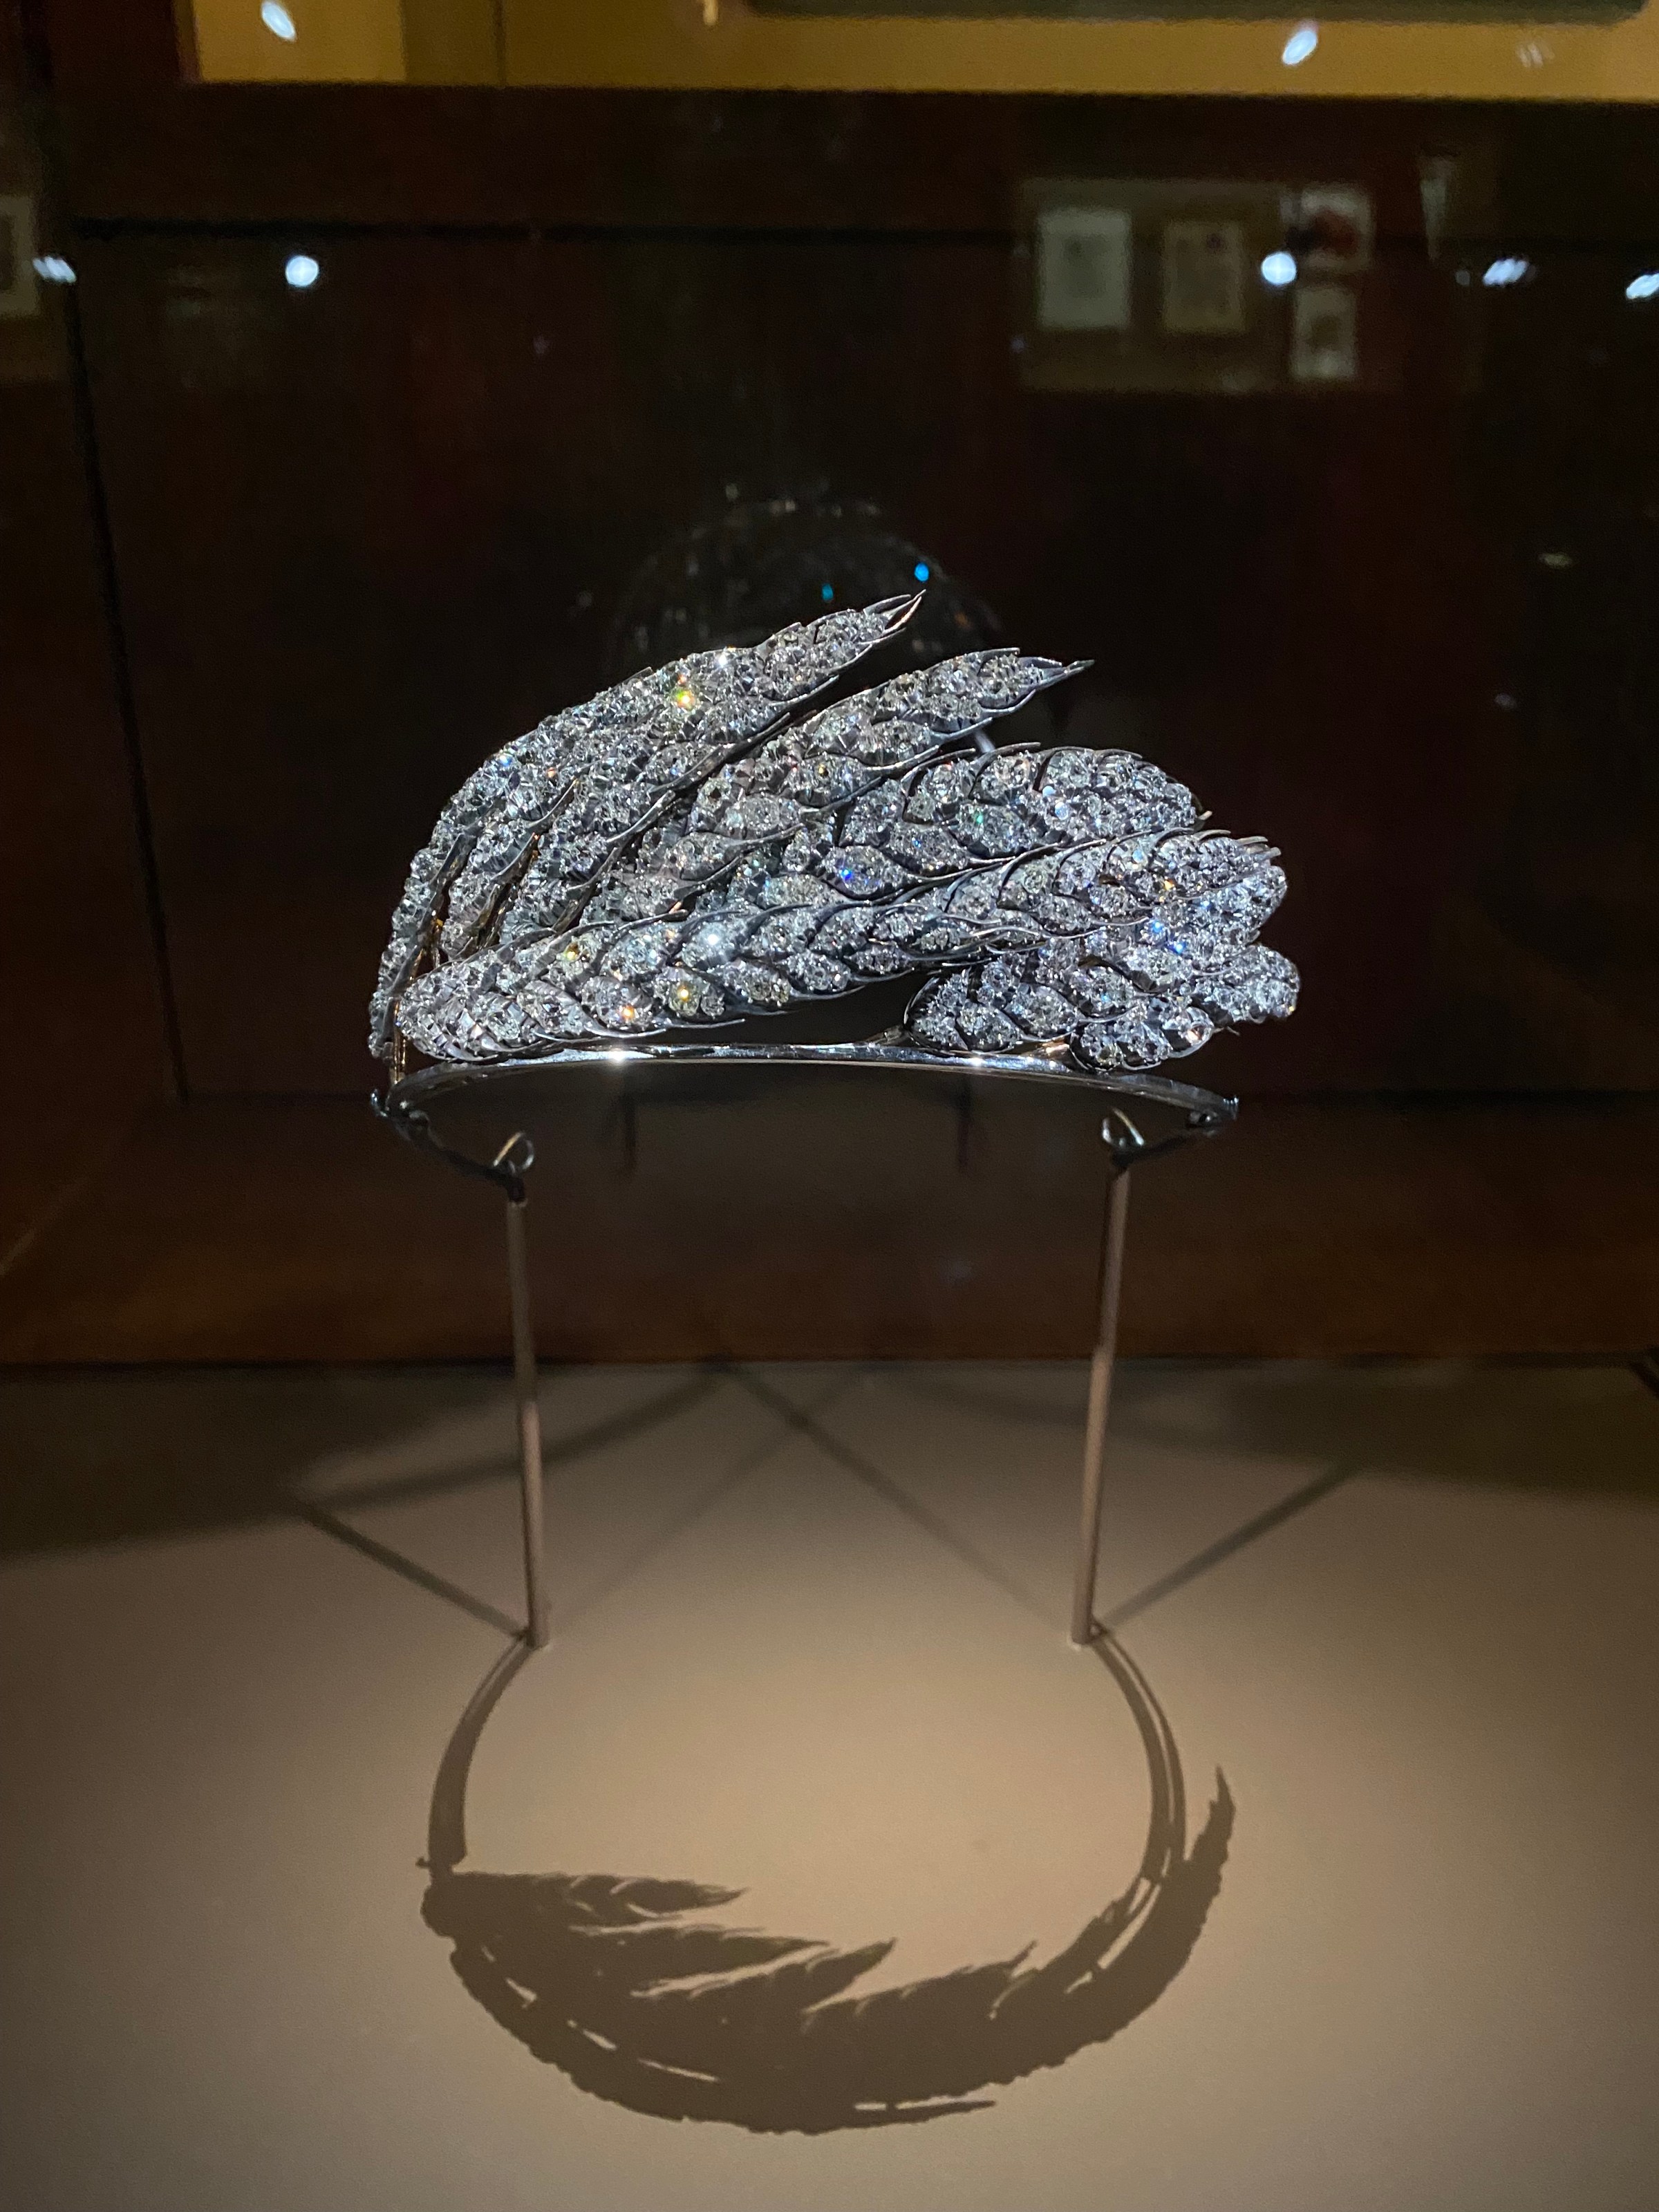 Chaumet Botanical Diamond Jewelry Exhibition